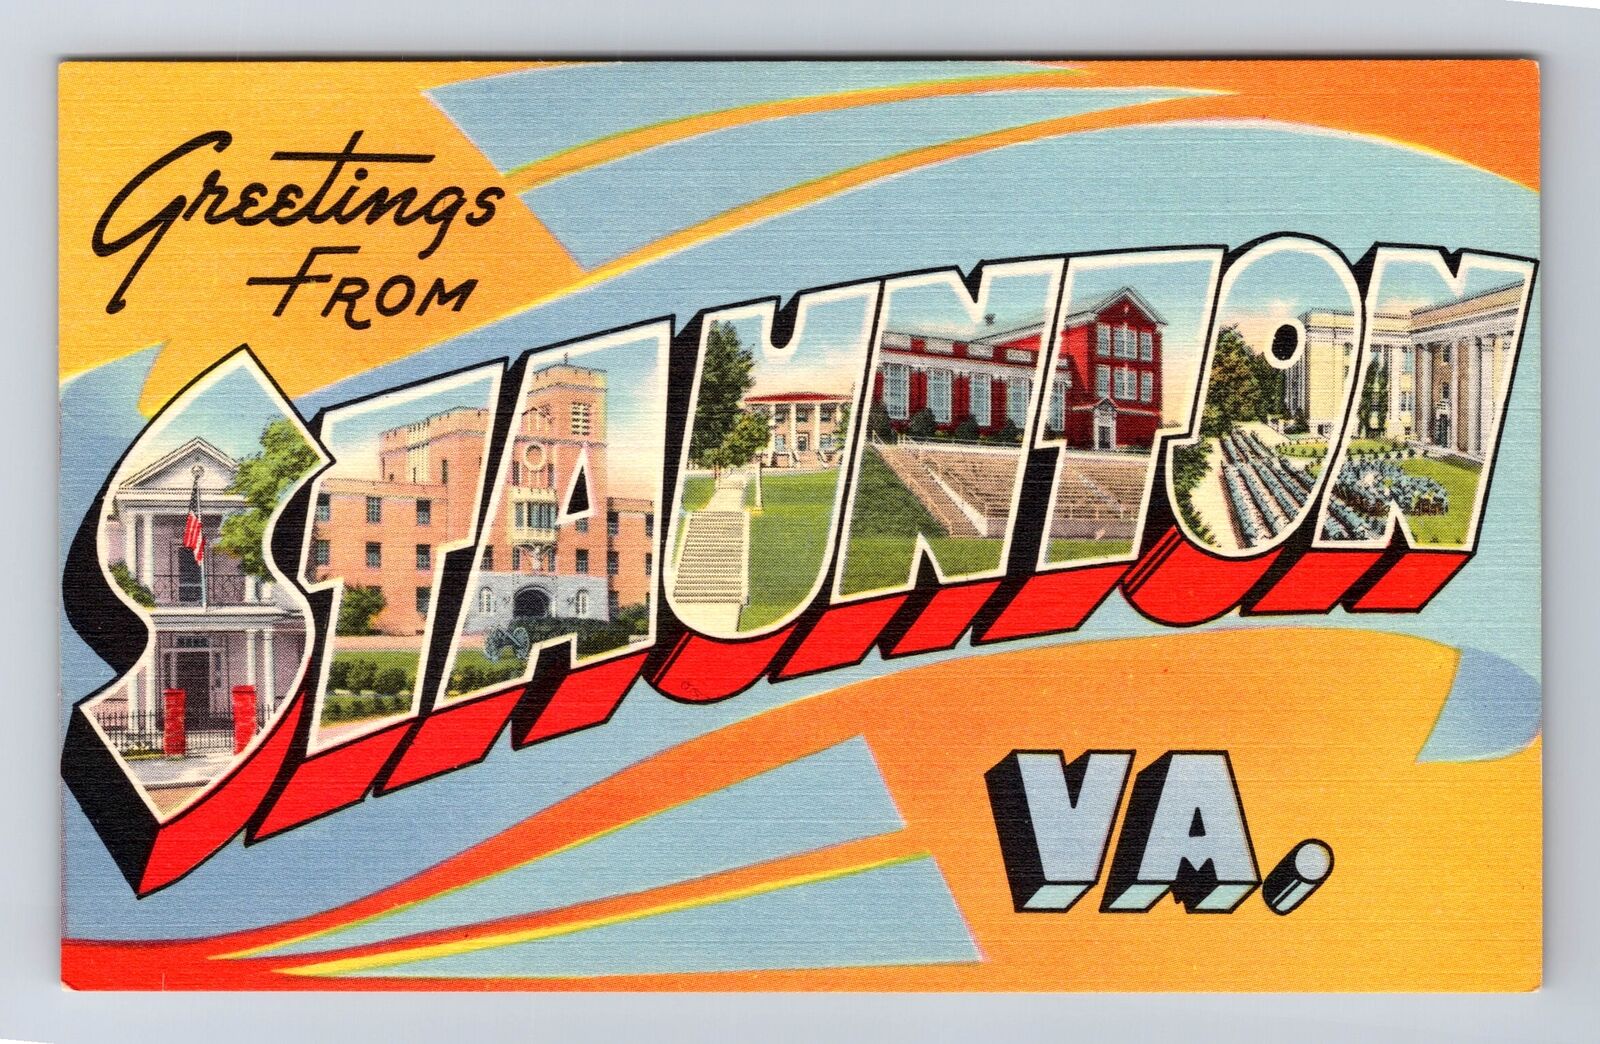 Staunton VA-Virginia, Scenic LARGE LETTER GREETING, Souvenir Vintage Postcard